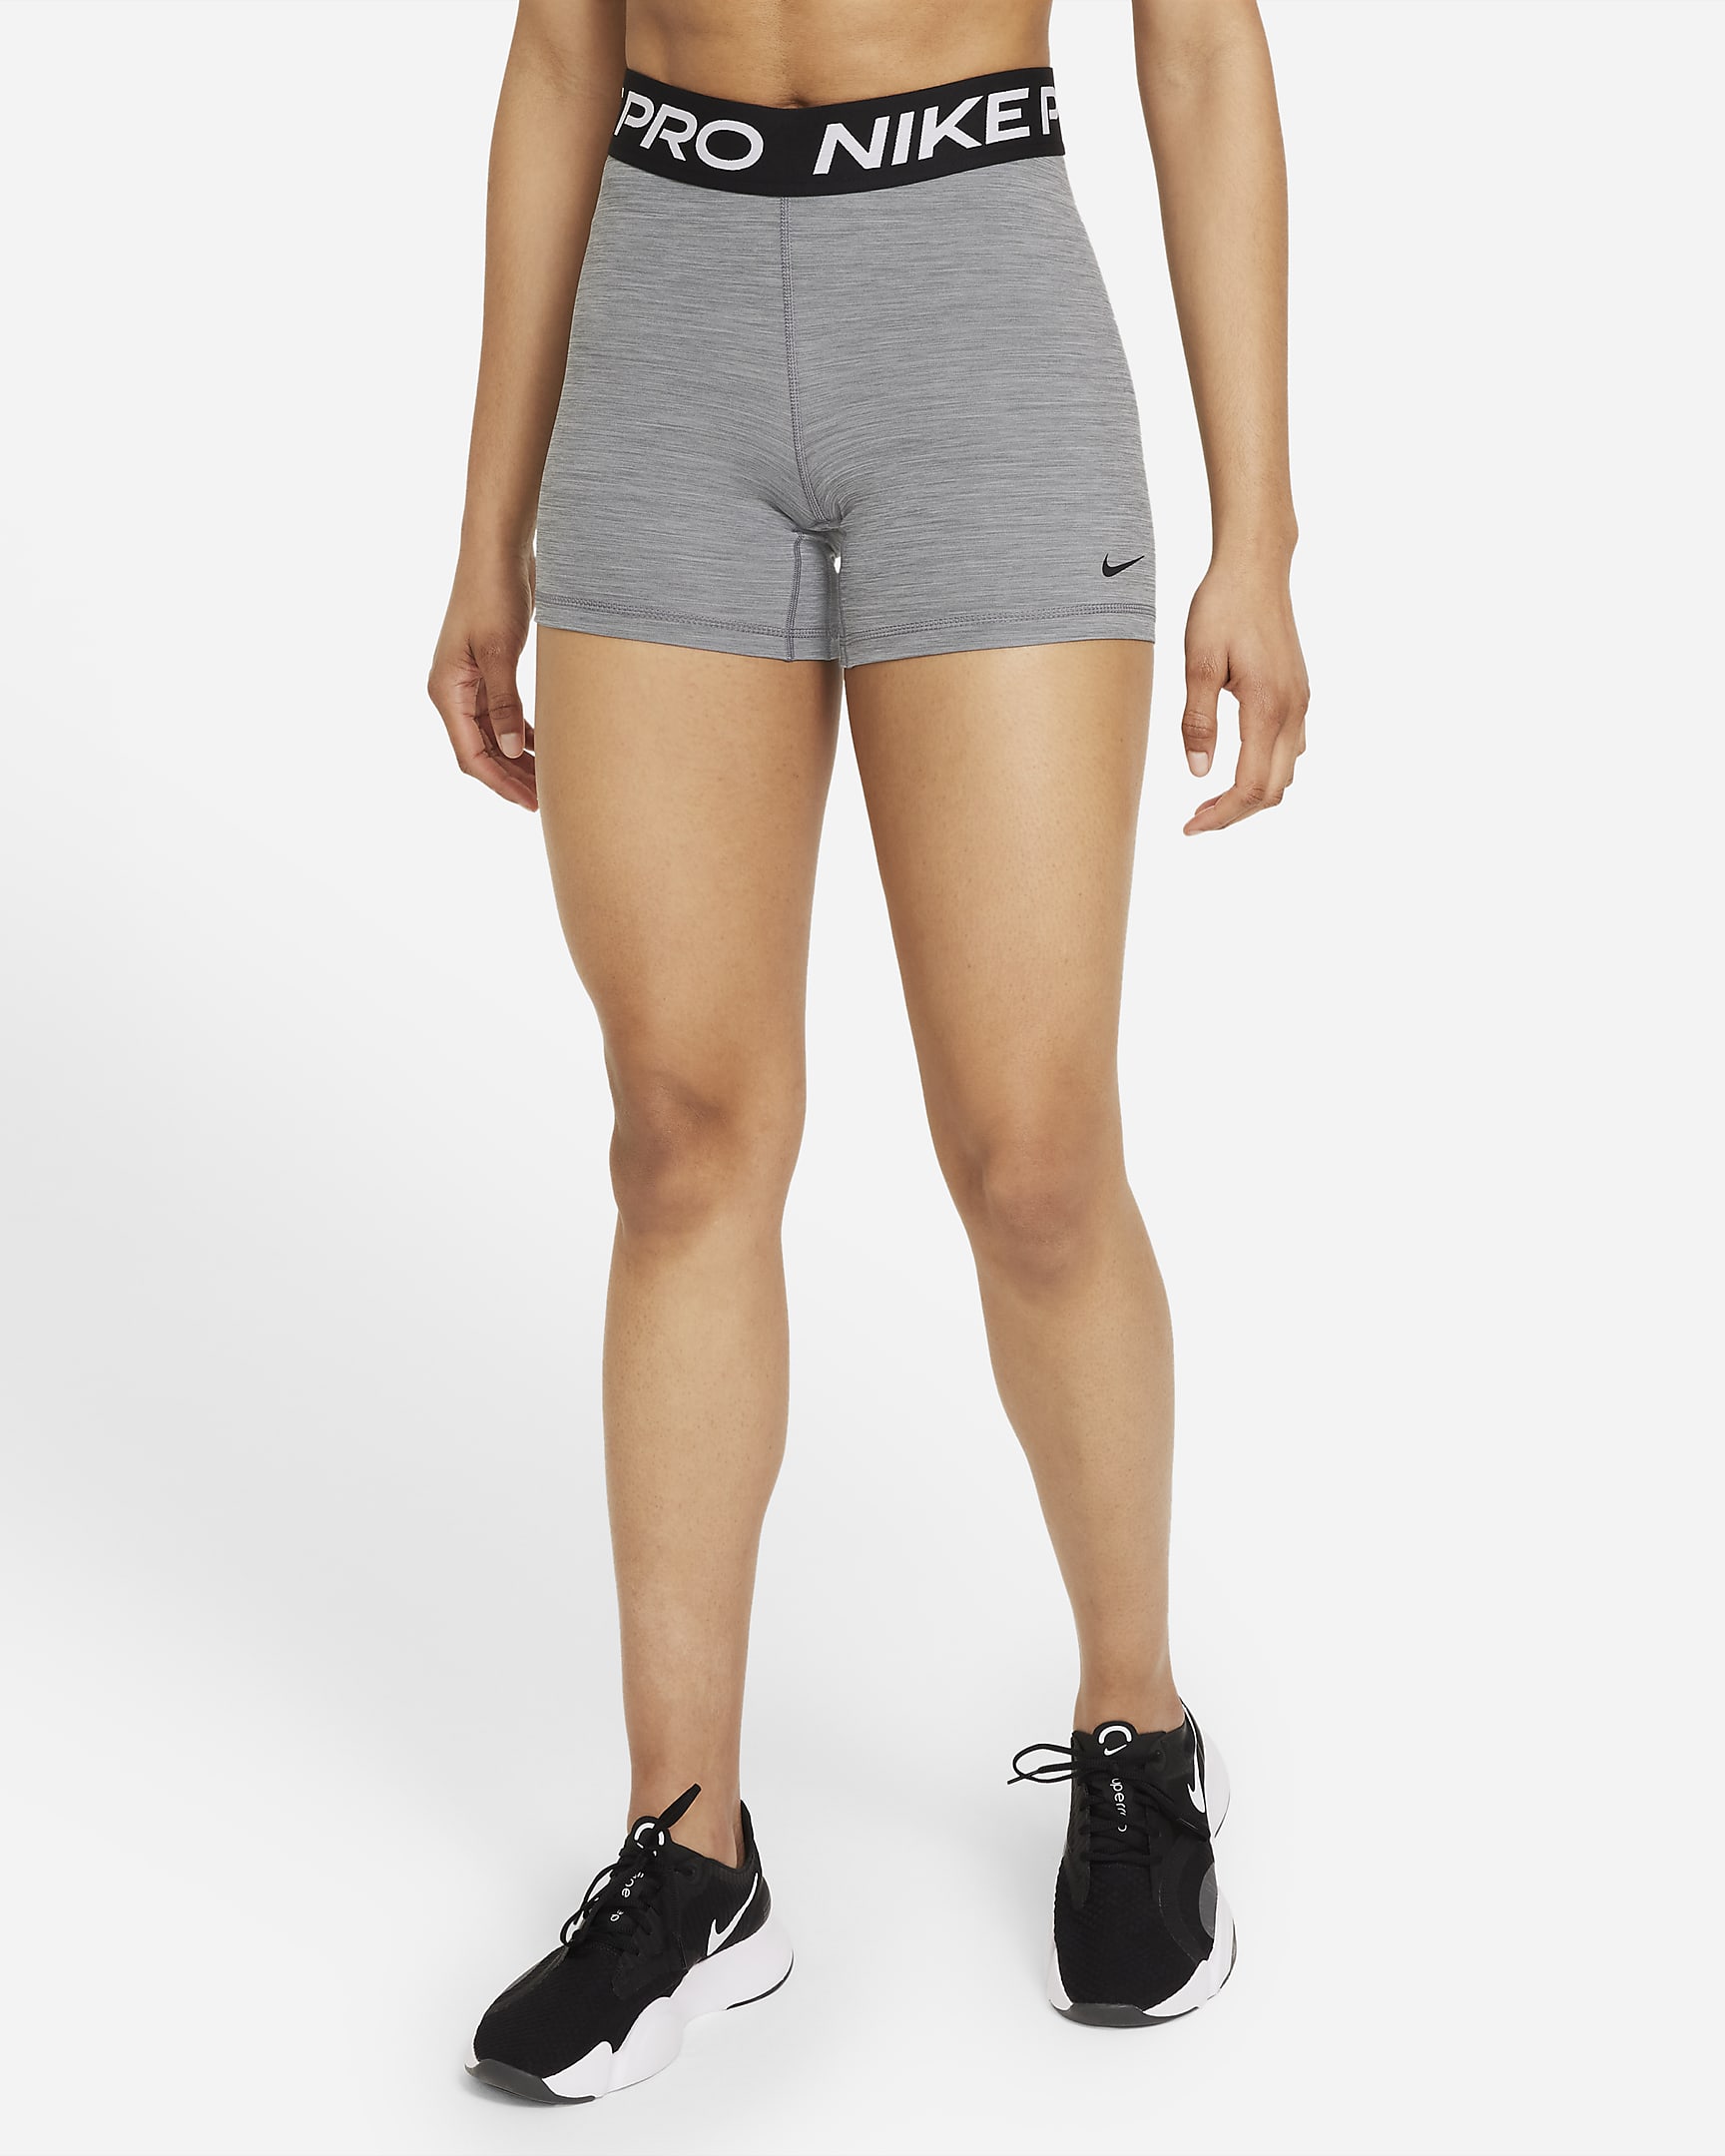 Nike шорты w NP 365 short 5in. Nike Pro Dri-Fit women's 18cm (approx.) High-Rise Training shorts. Athletic Pro шорты серые. Заказать белые шорты Nike Pro 365 женские. Шорт 365